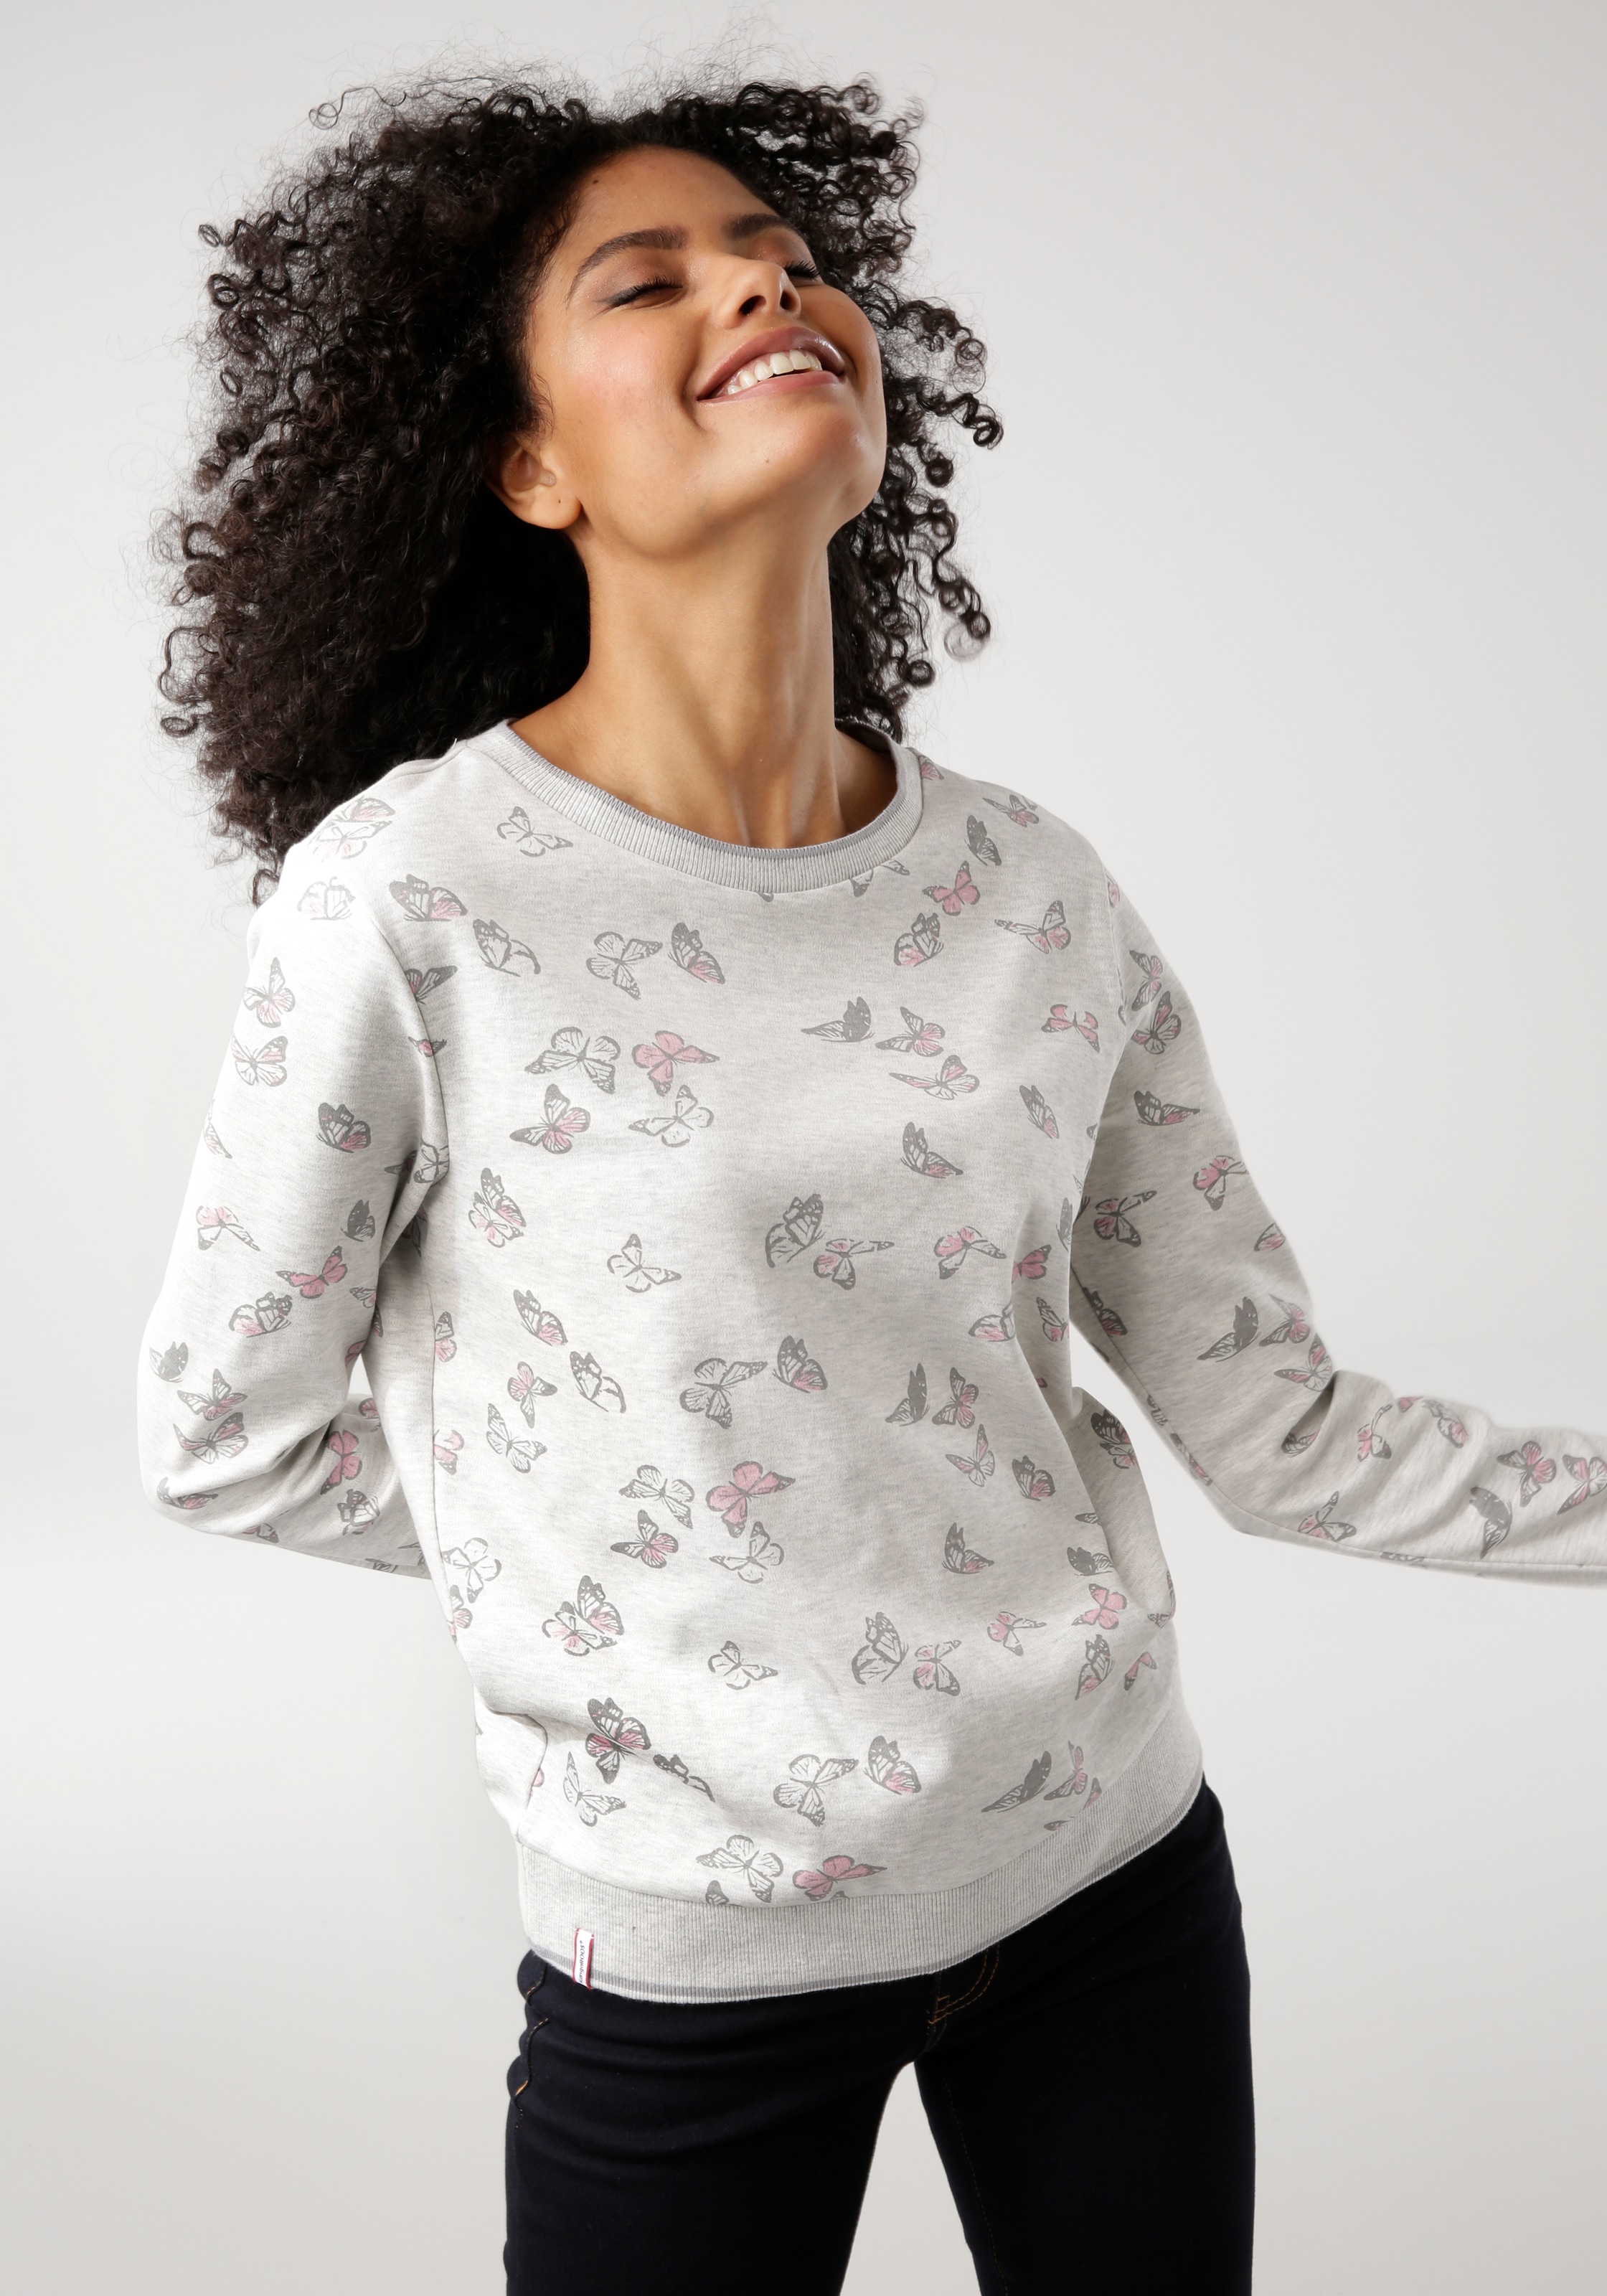 KangaROOS mit trendigem Sweatshirt, online bei Schmetterlings-Allover-Druck